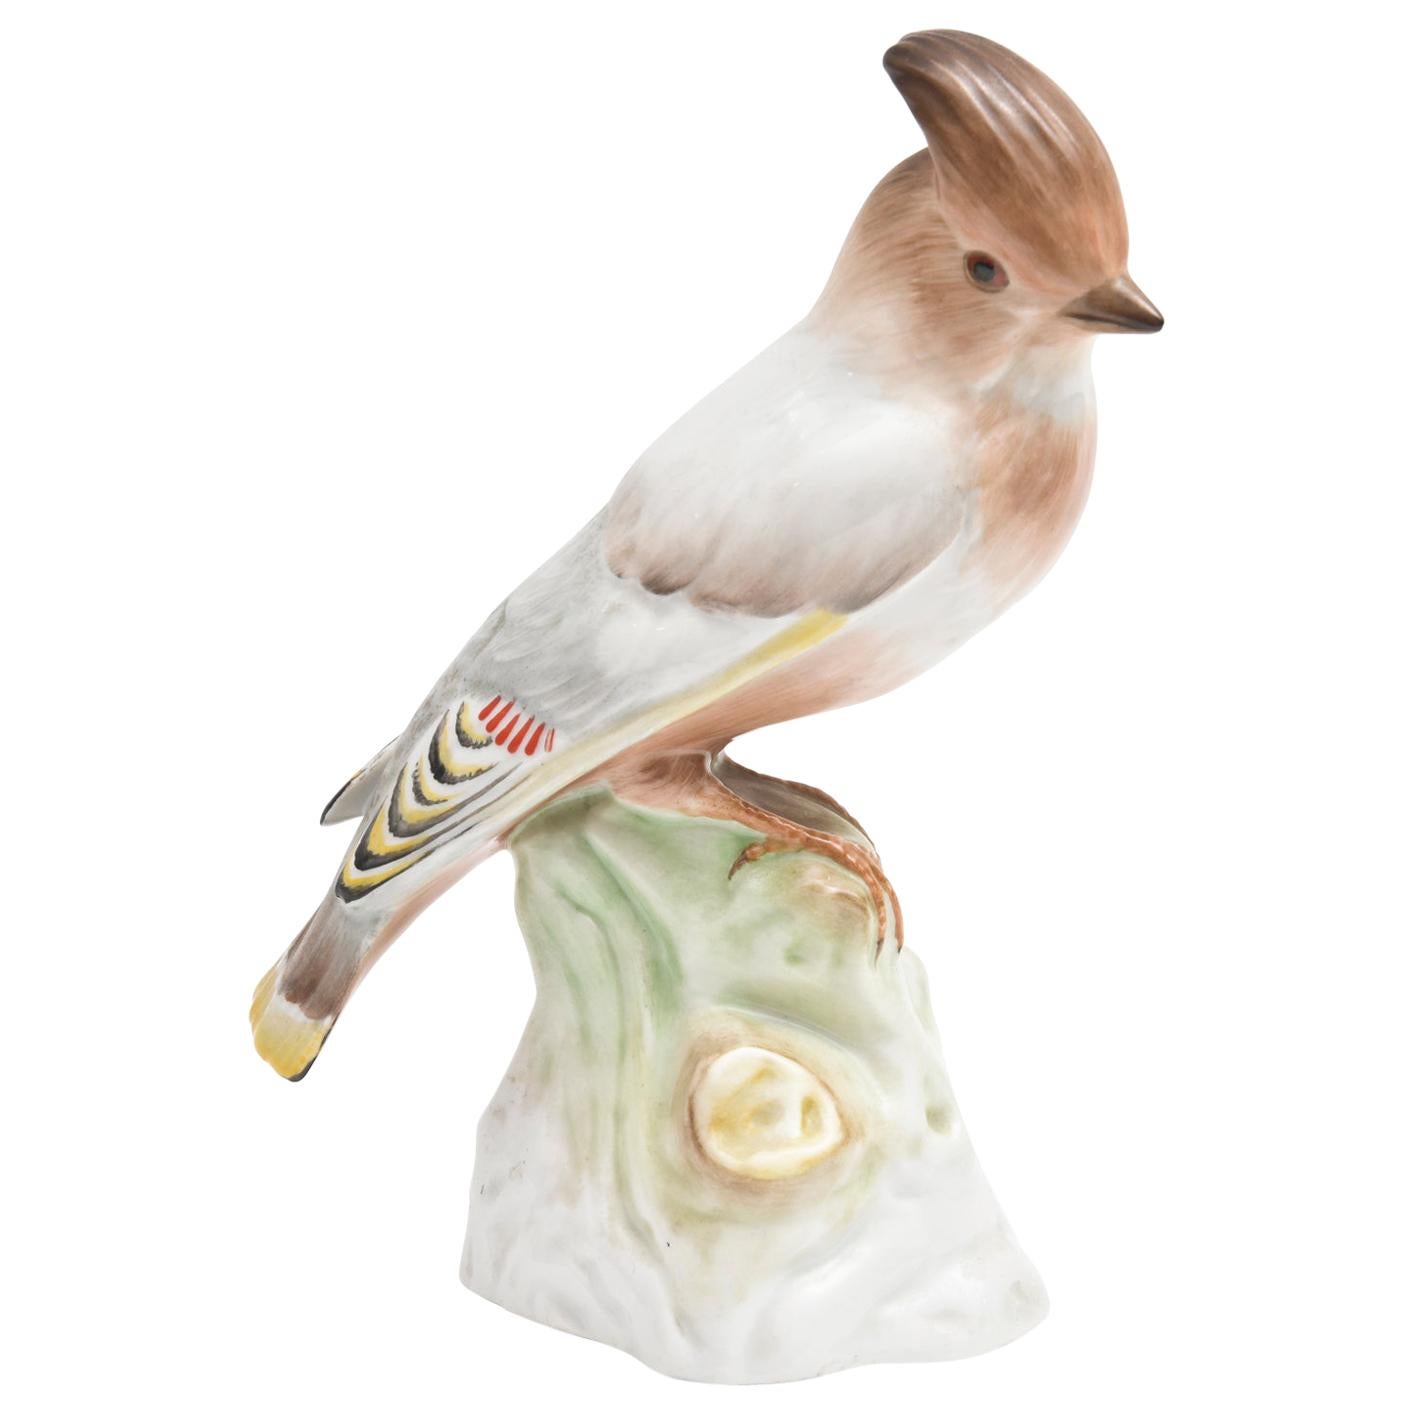 Handmade Ceramic Bird Figurines, Ready to Paint Bird Statues